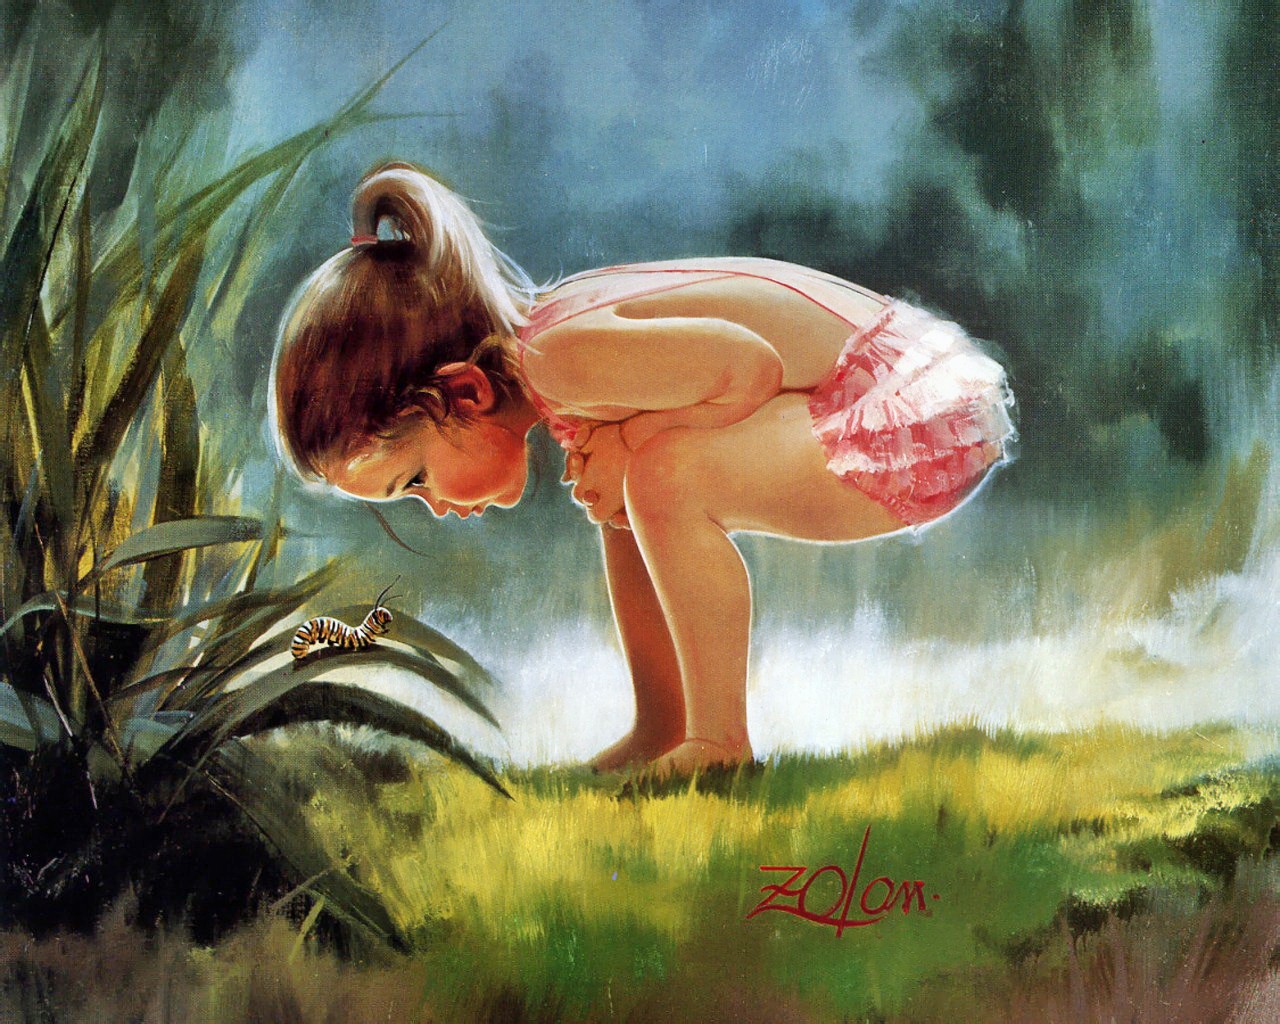 18 Painting Wallpaper - Girl Looking At Caterpillar Painting - HD Wallpaper 